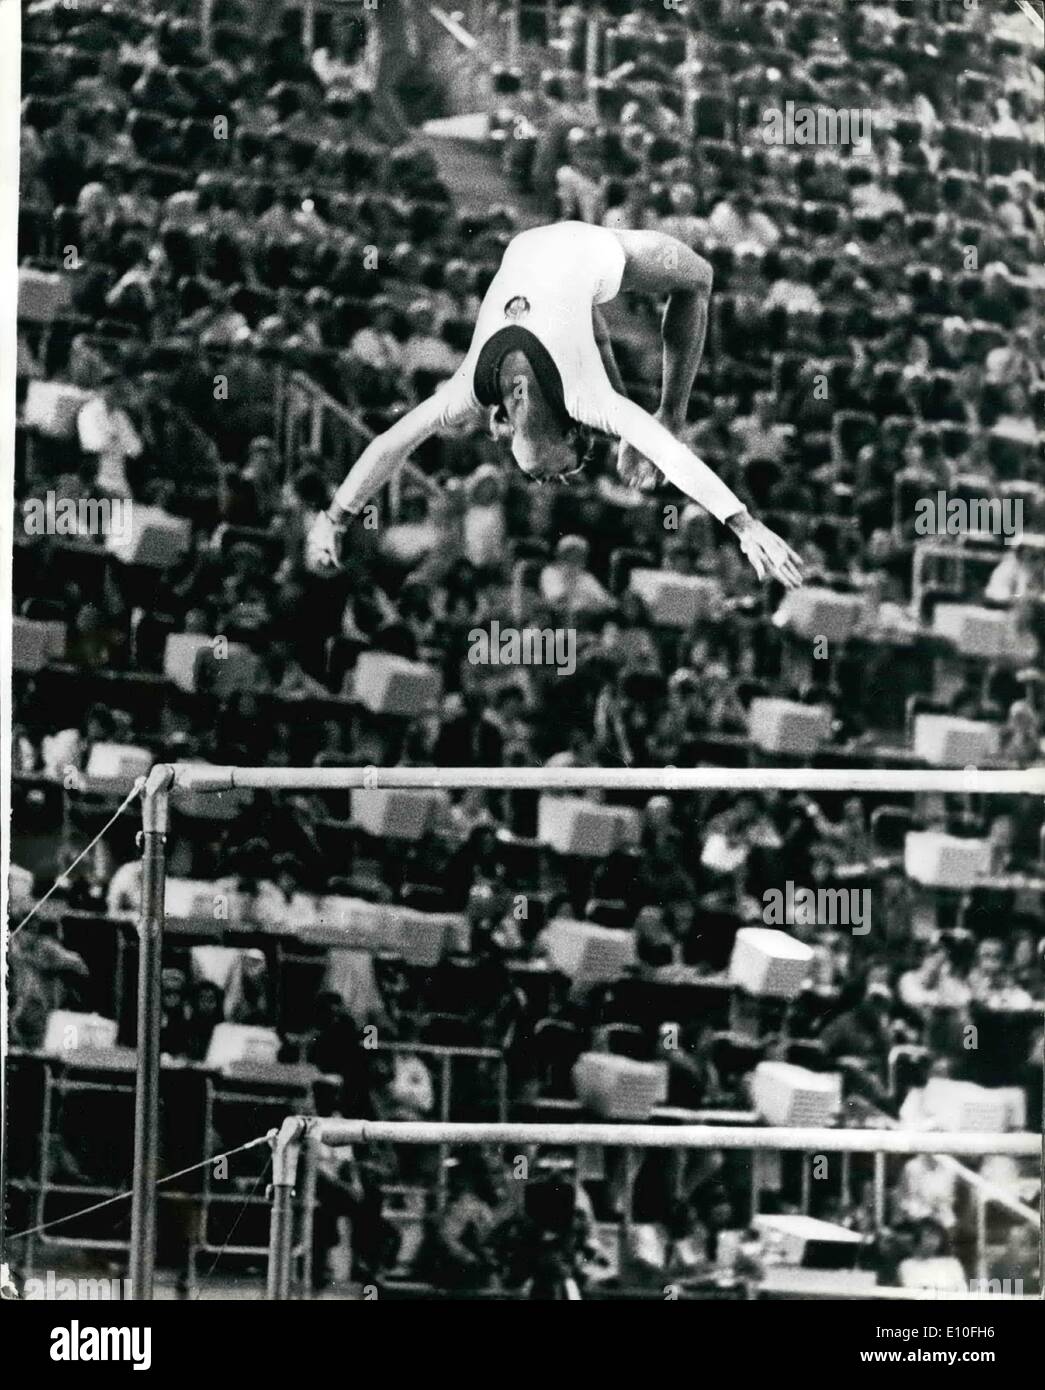 Sep. 09, 1972 - Munich Olympics. Gymnastics. Olga Korbut of Russia in Action. APRESS.c Stock Photo